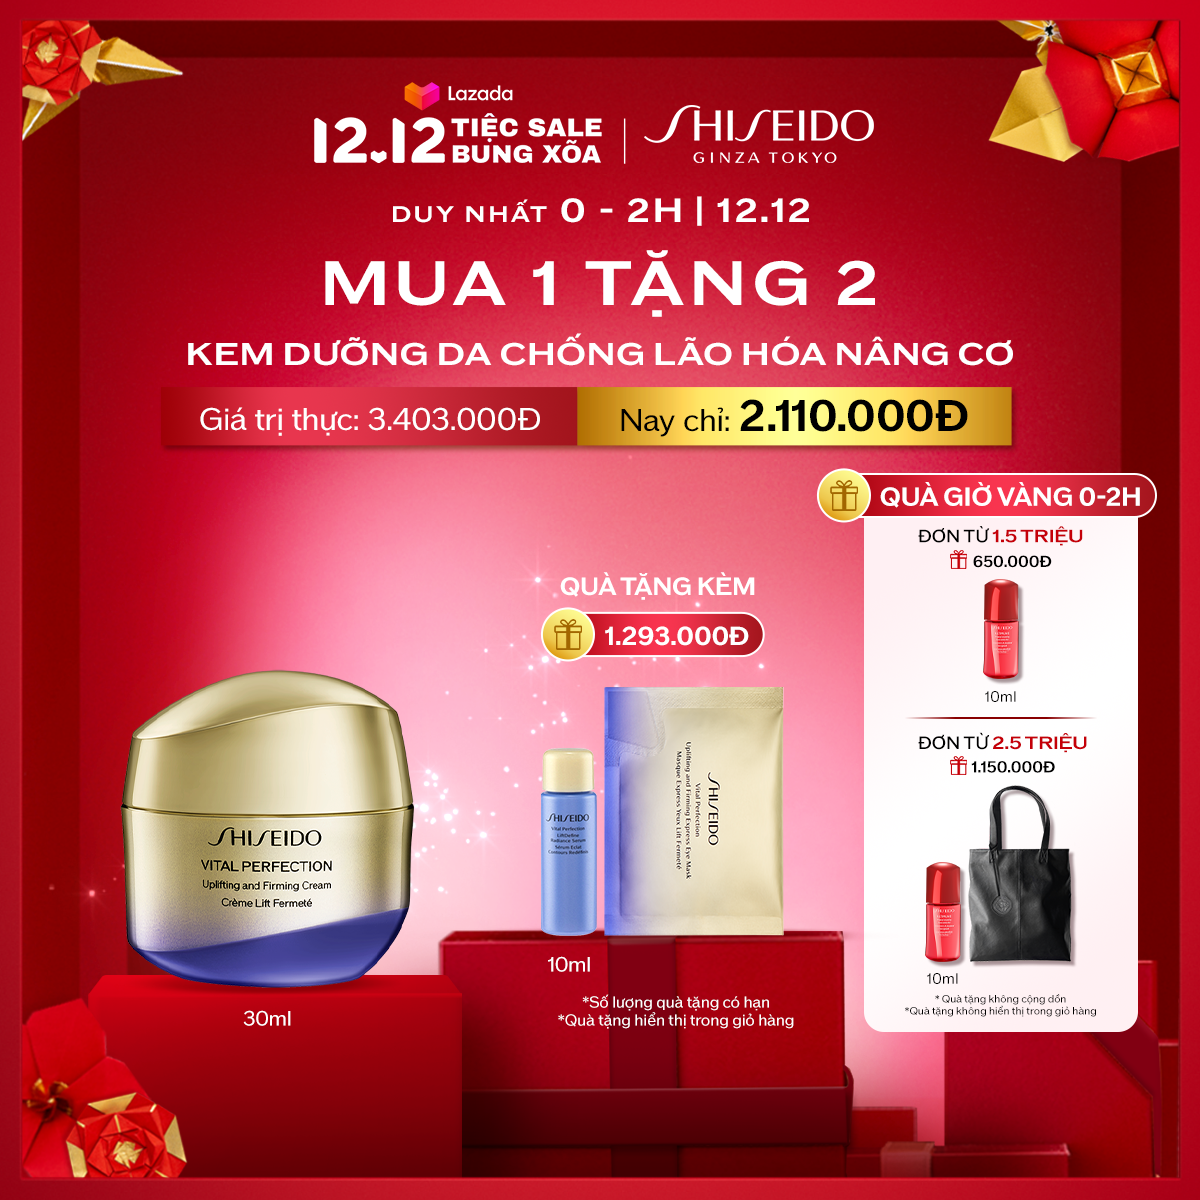 [MUA 1 TẶNG 2 - 12.12] Kem dưỡng da Shiseido Vital-Perfection Uplifting and Firming Cream 30ml